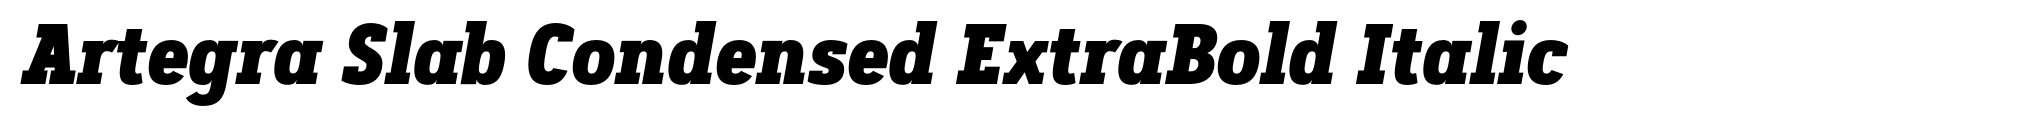 Artegra Slab Condensed ExtraBold Italic image